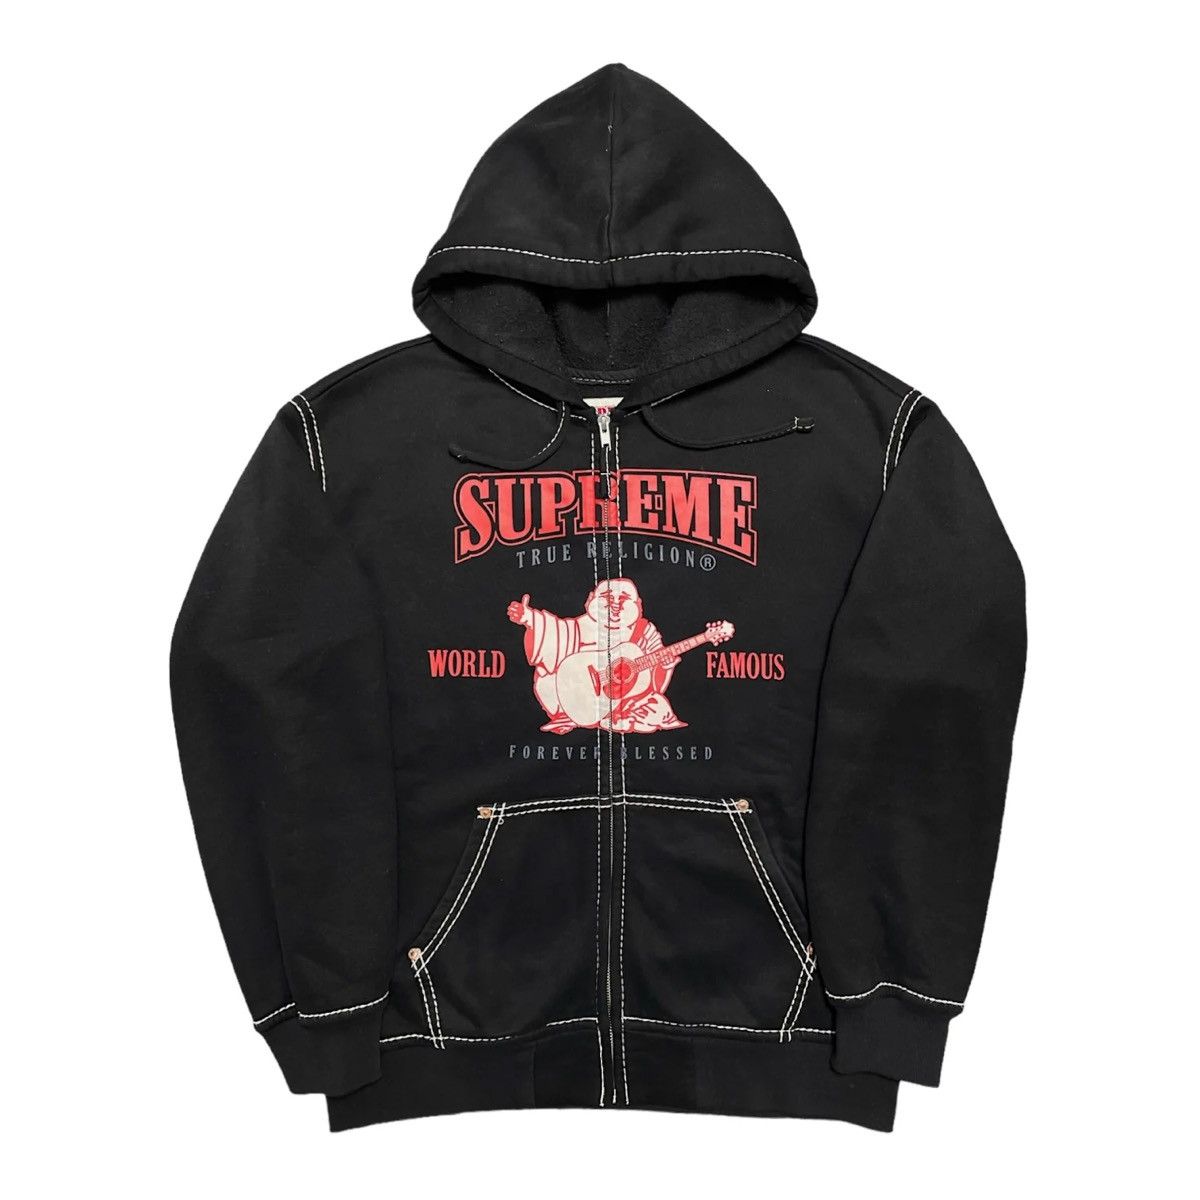 Supreme Supreme True Religion Zip Up Hooded Sweatshirt Black | Grailed